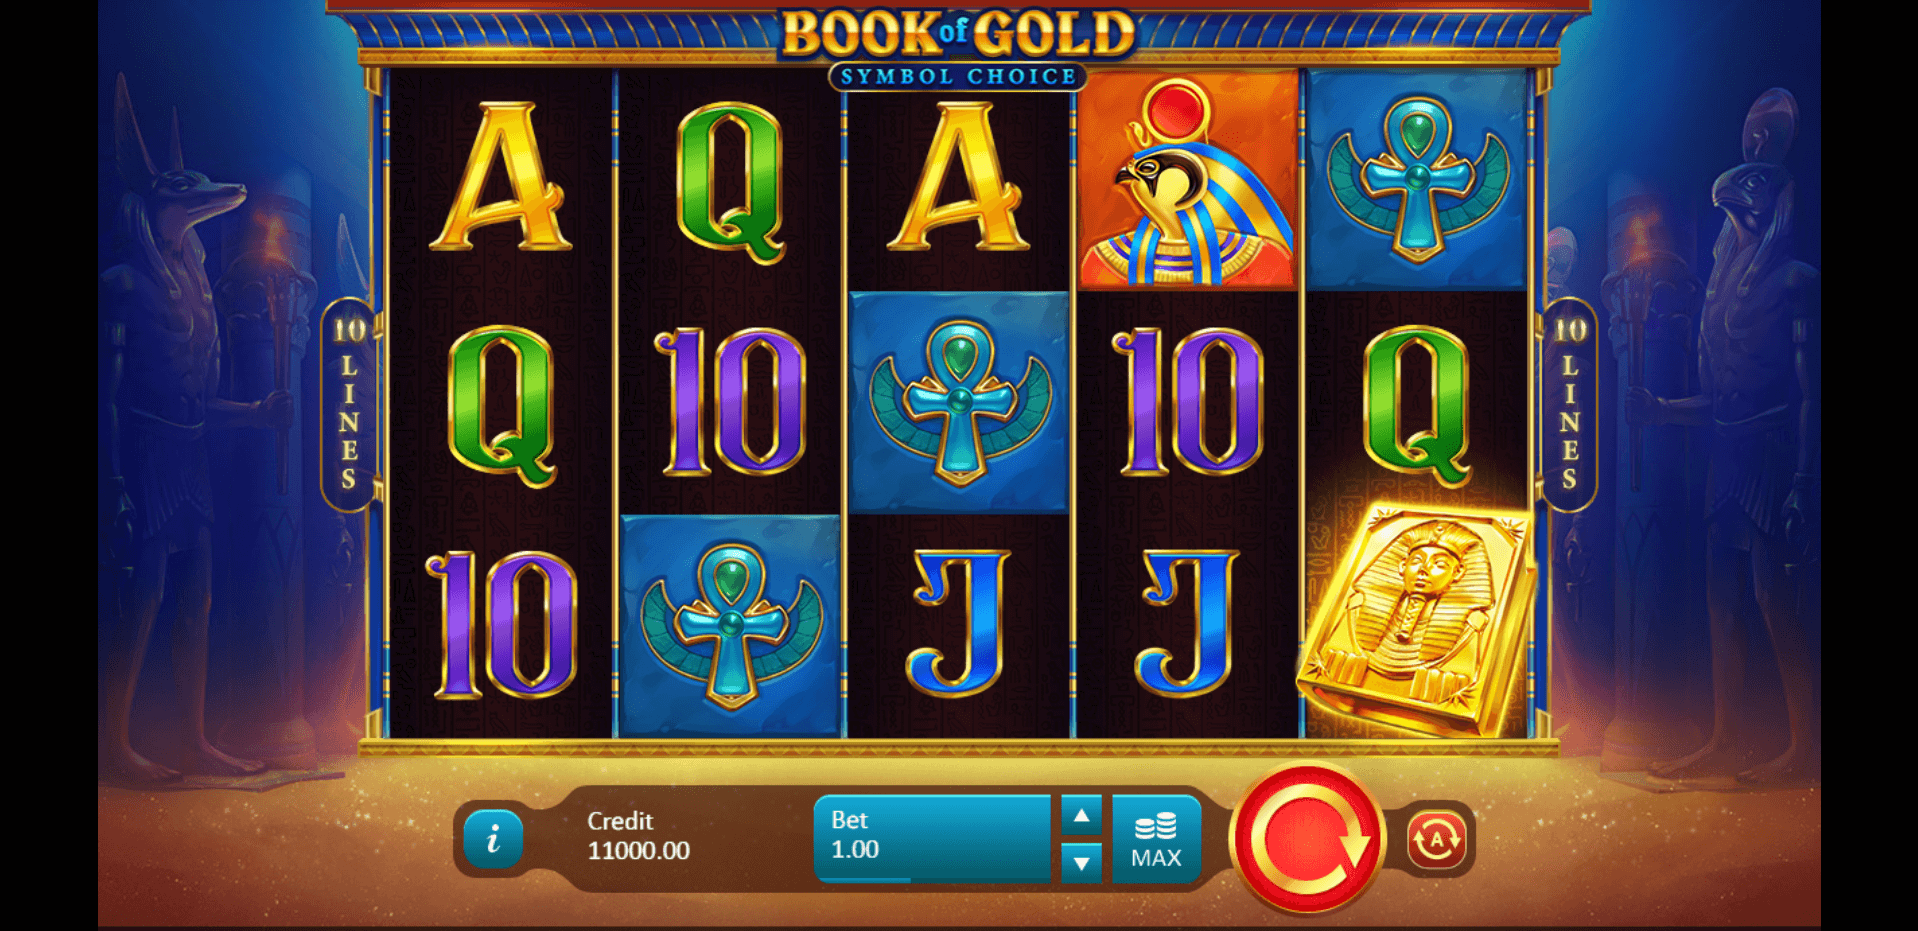 Book of Gold Symbol Choice slot play free